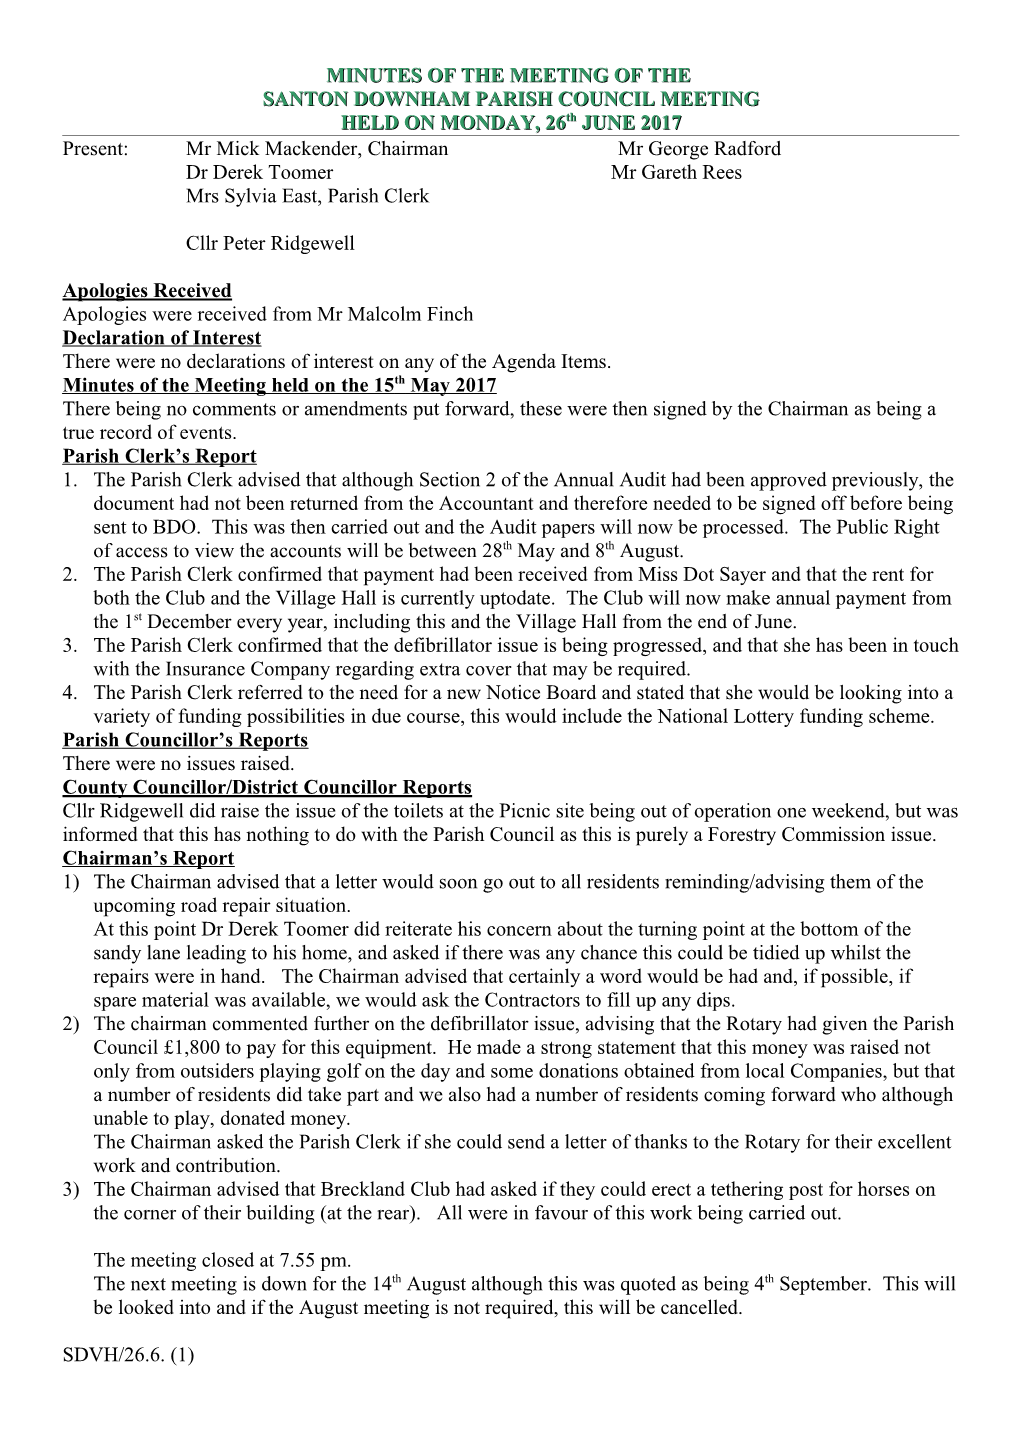 Minutes of the Santon Downham Parish Council